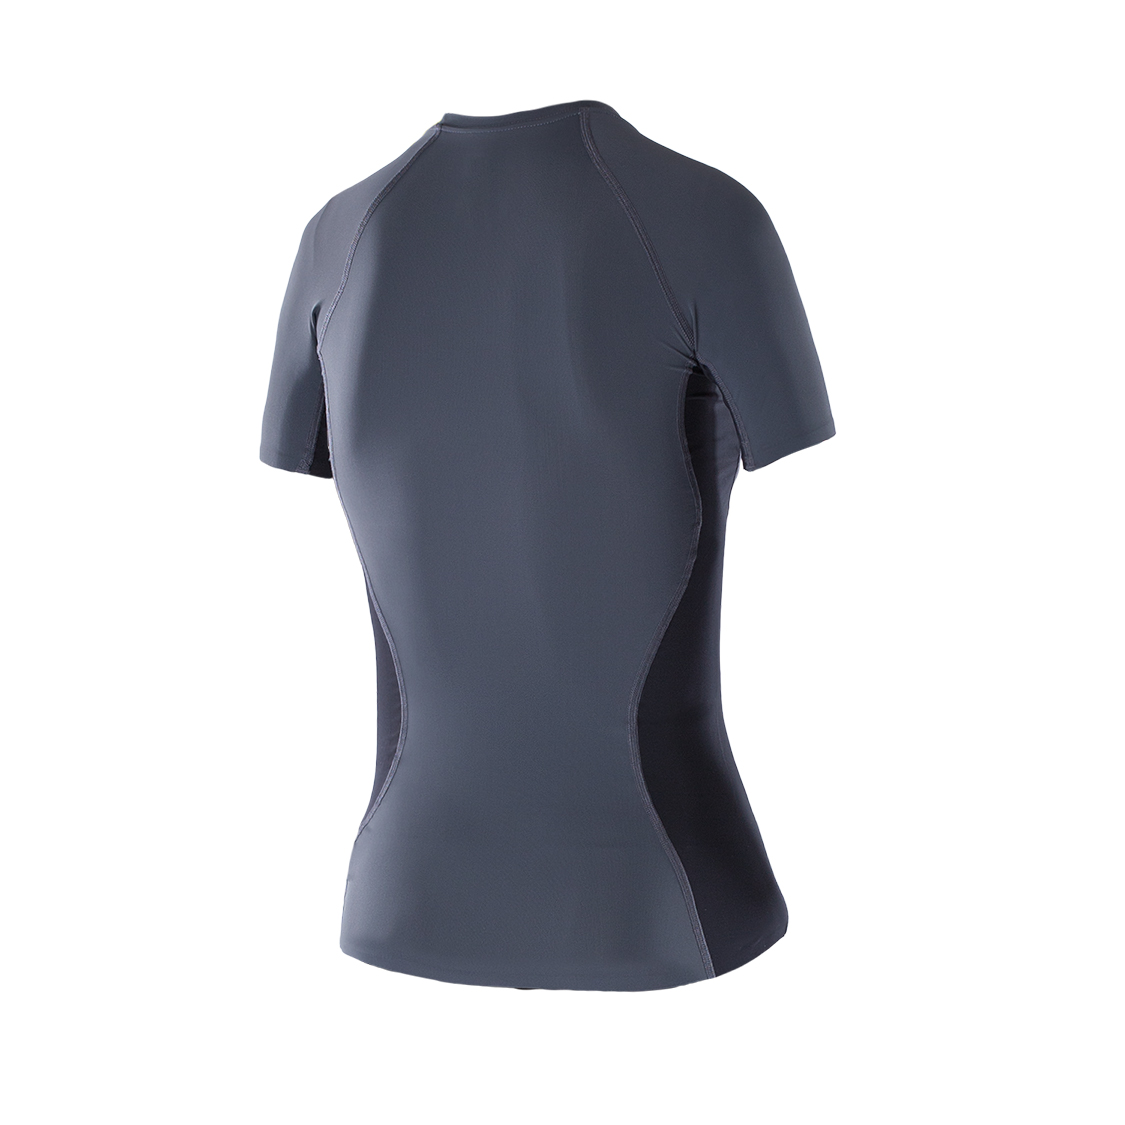 Women's Athletic Compression short sleeve Top Women, Grey/Black